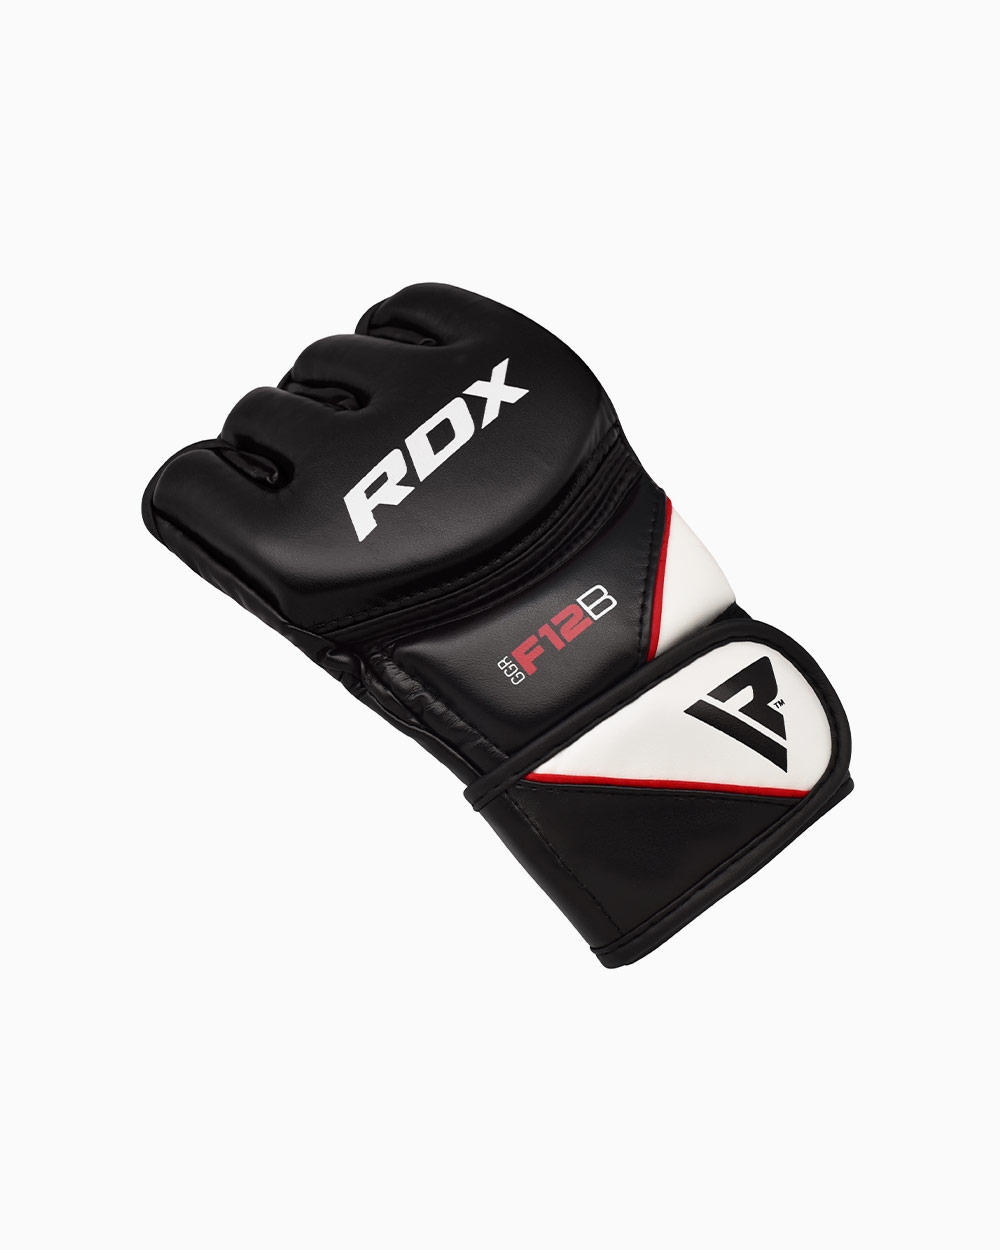 MMA Gloves - RDX